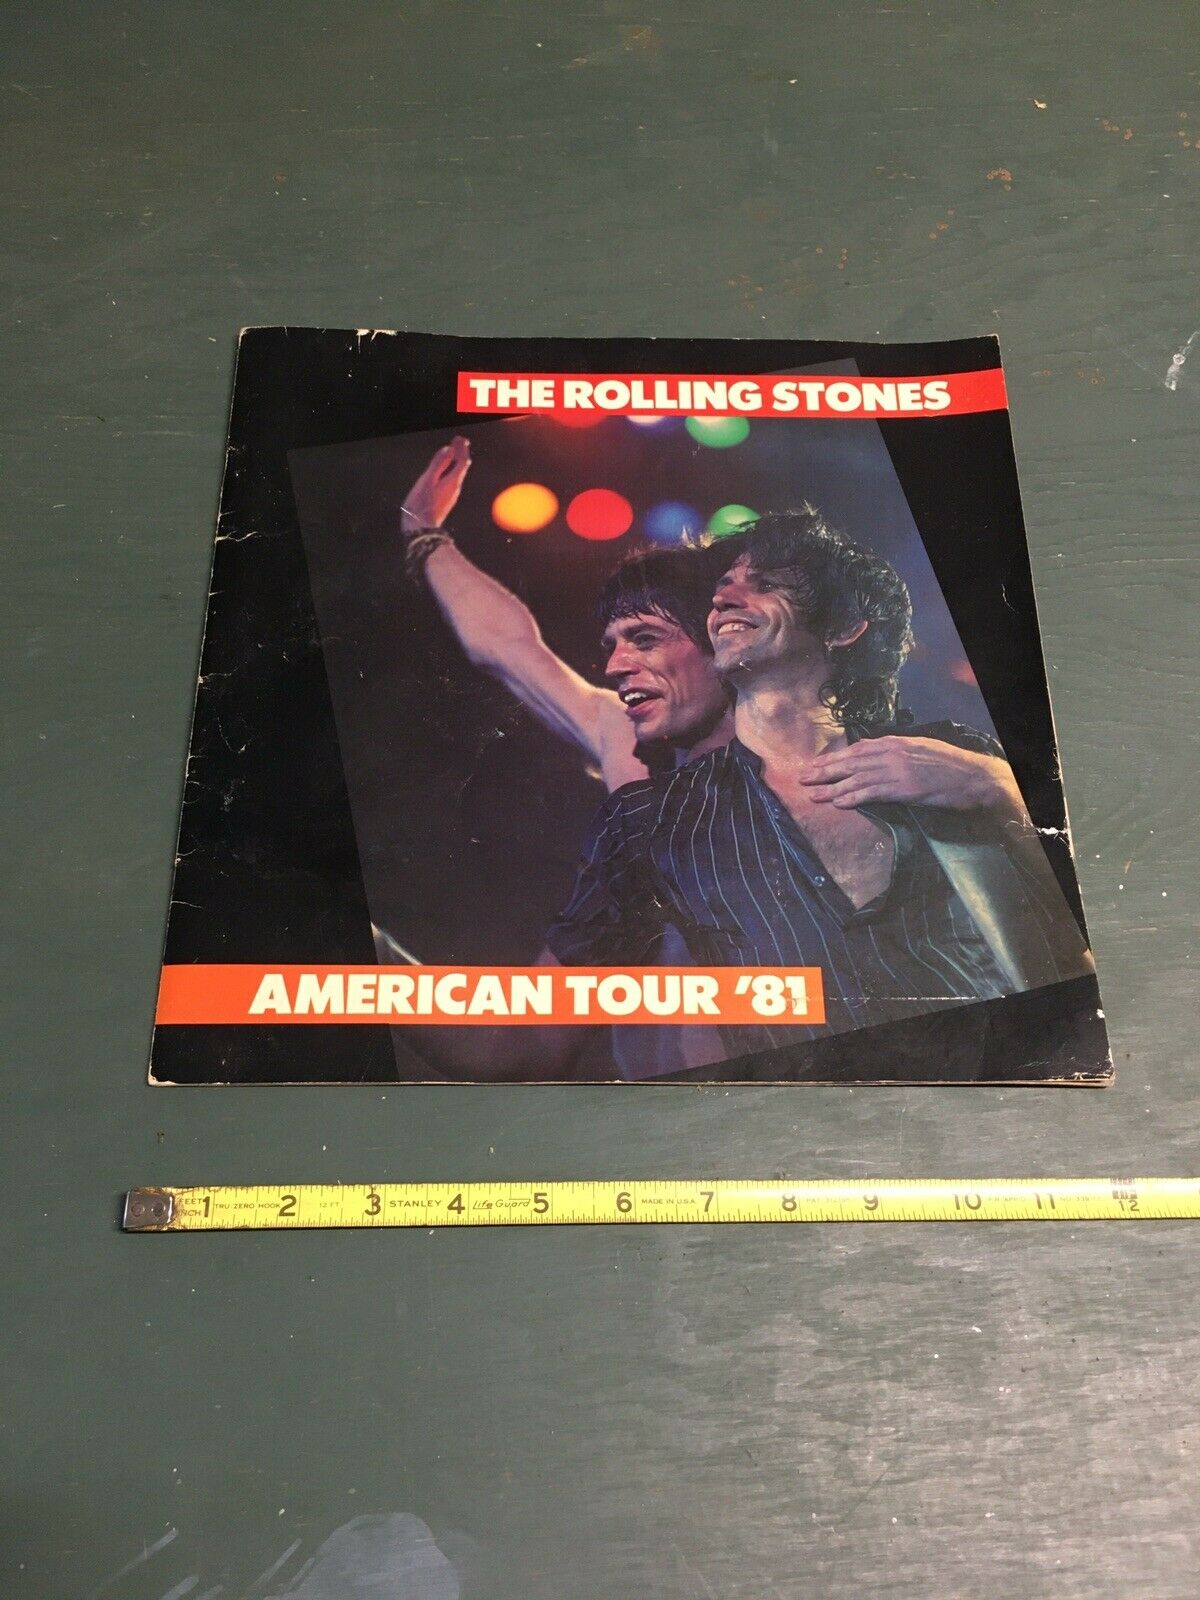 The Rolling Stones “american Tour '81” Official Tour Program Original Book Album